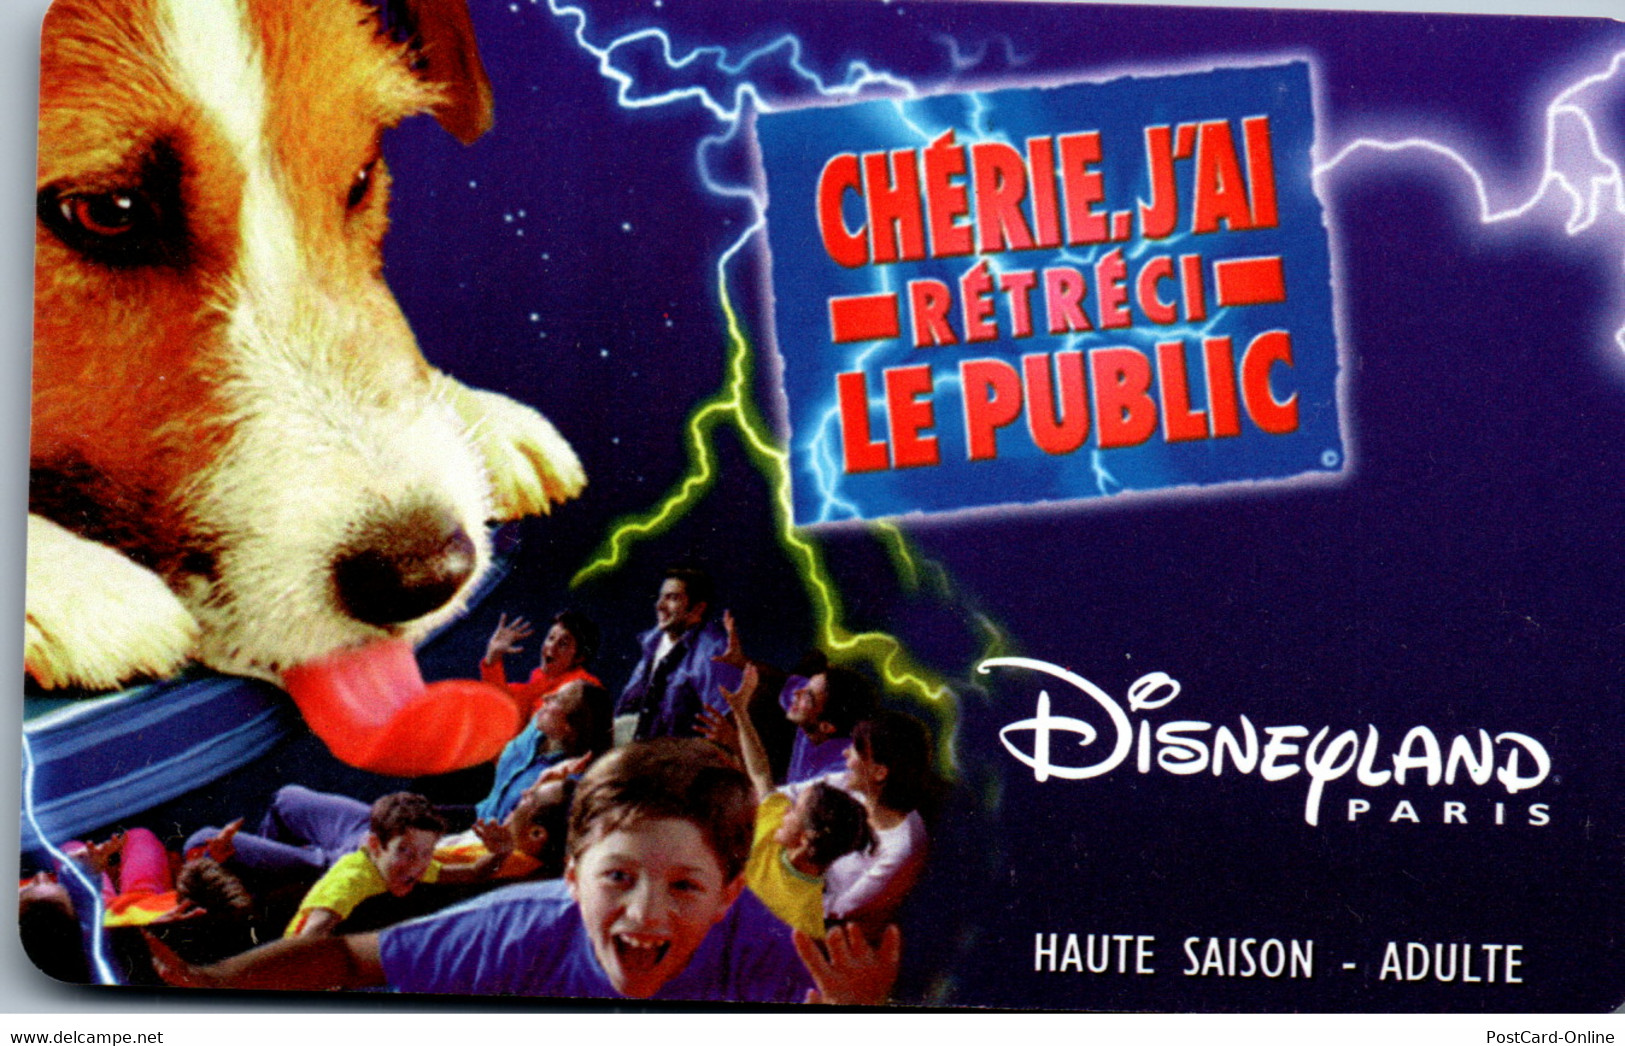 19494 - Frankreich - Disneyland Paris , Eintrittskarte , Adult , Haute Saison - Pasaportes Disney